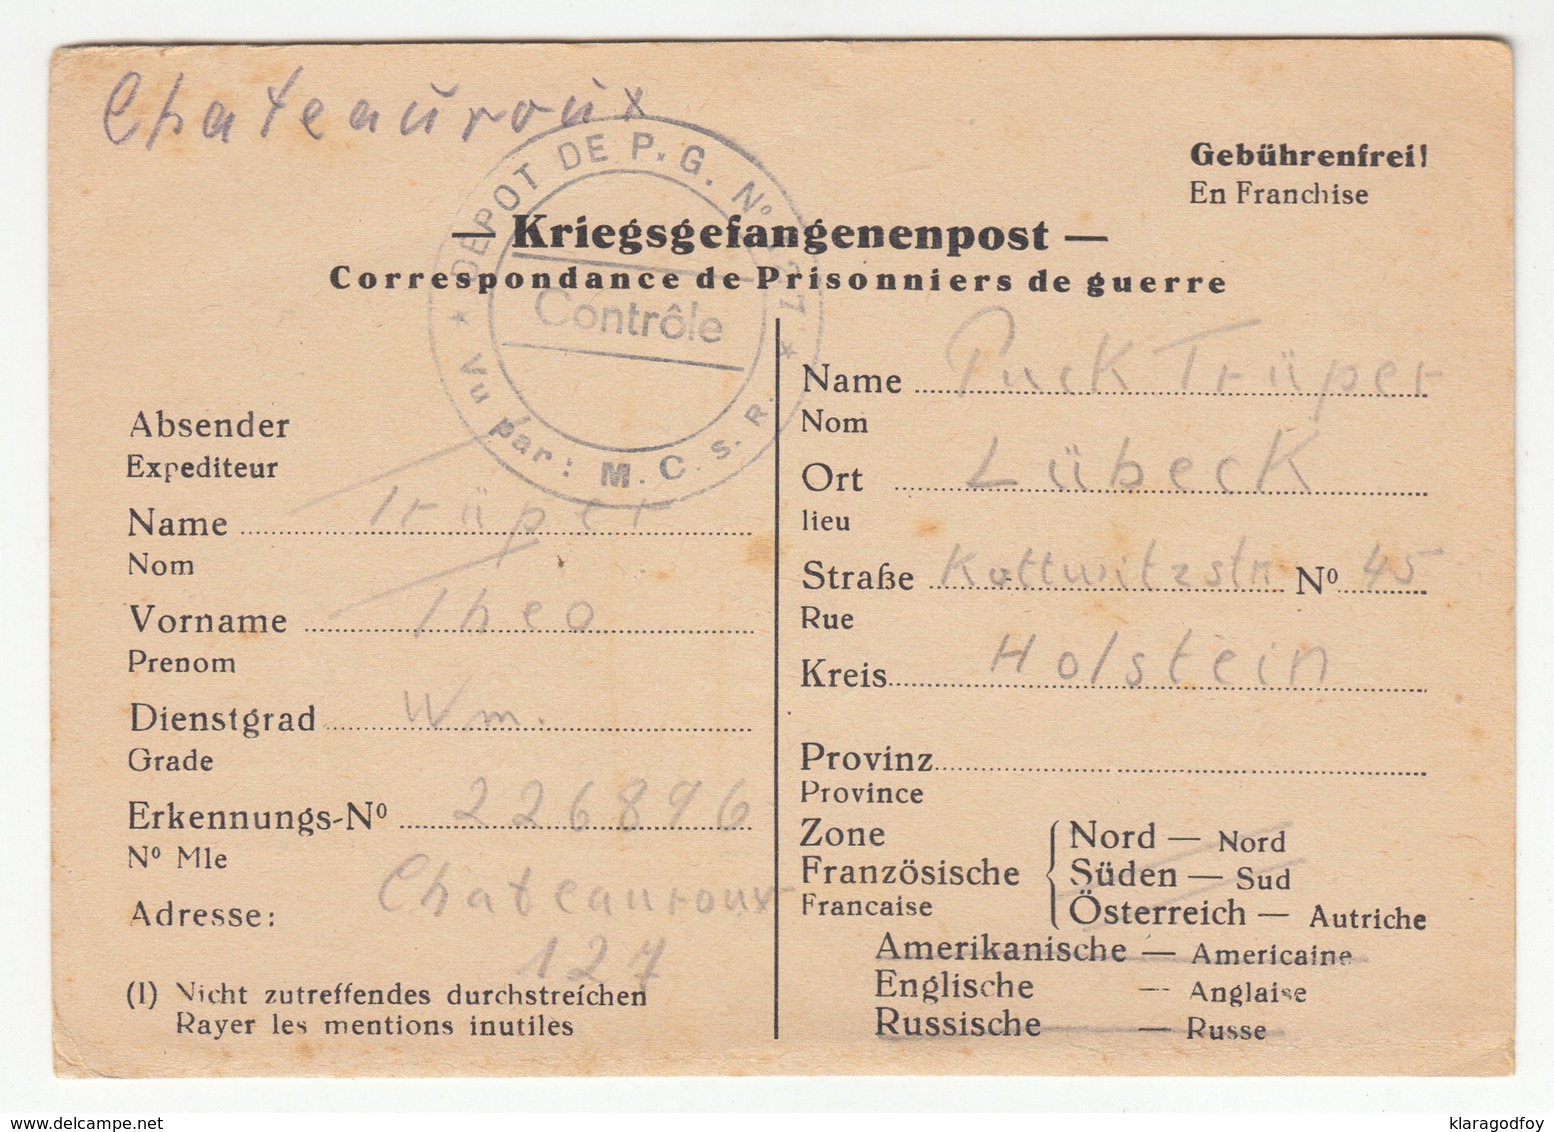 France Depot De PG Censored POW Kriegsgefangenepost Postal Card Travelled 1946 Chateauroux To Lübeck Germany B181101 - Guerra Del 1939-45